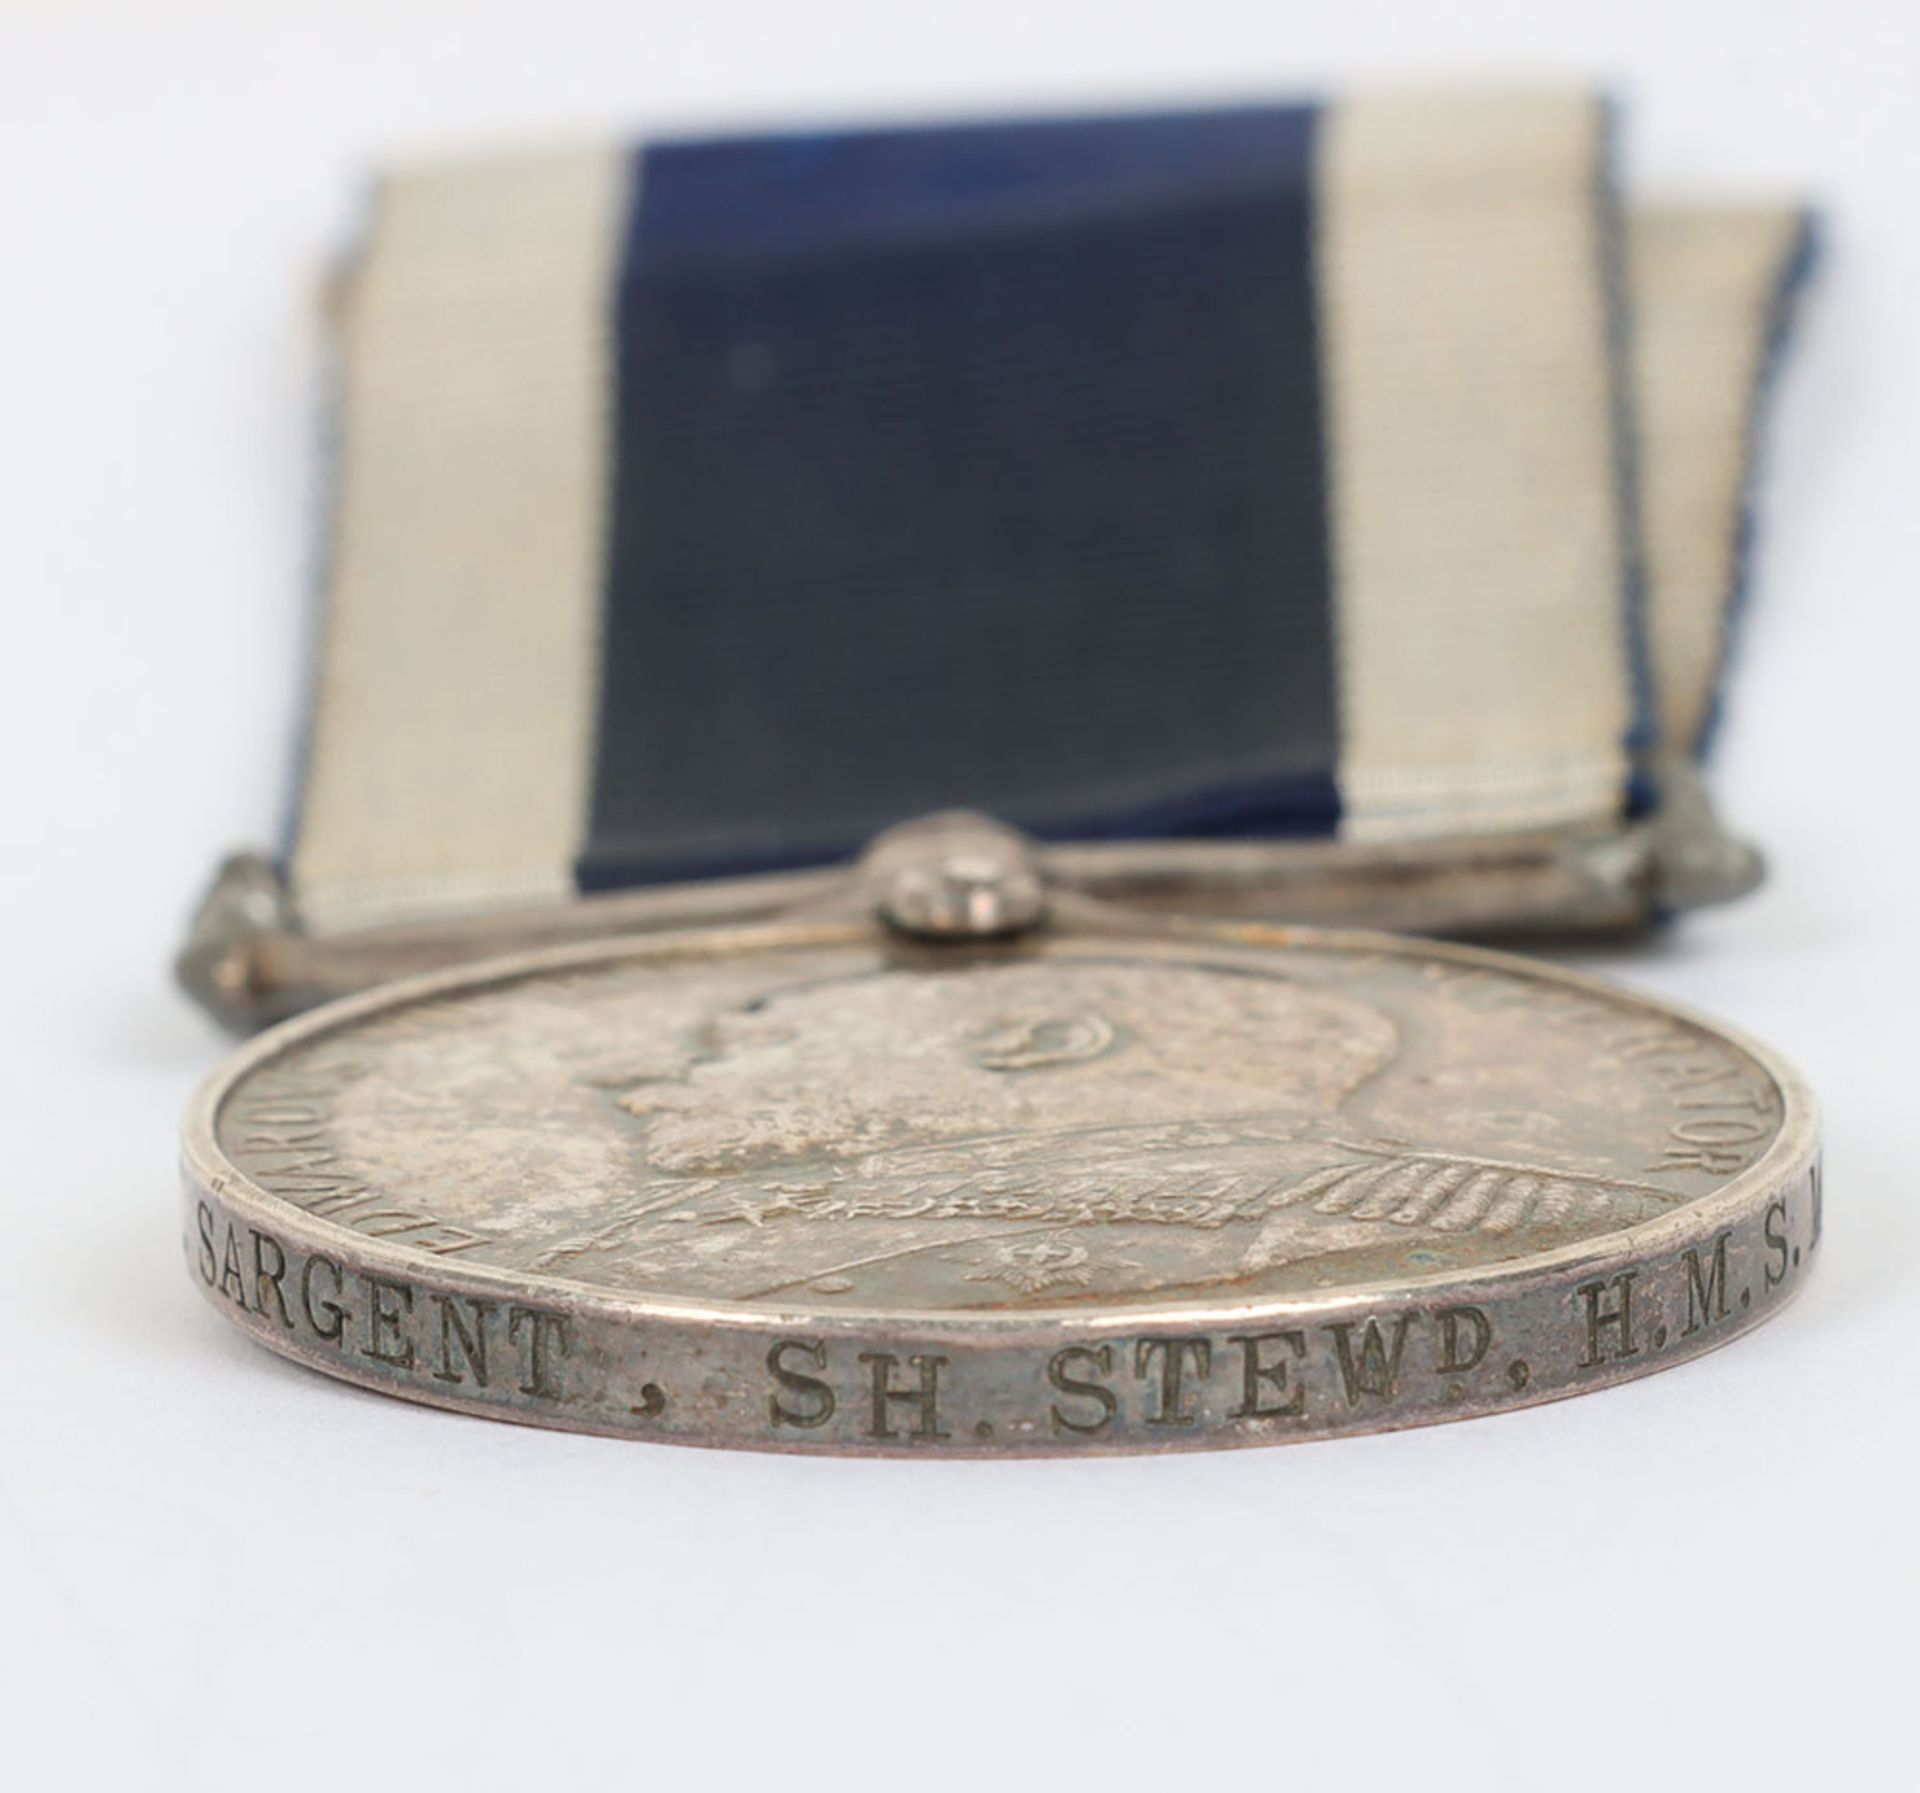 Edwardian Royal Navy Long Service Medal to a Ships Steward - Image 5 of 5